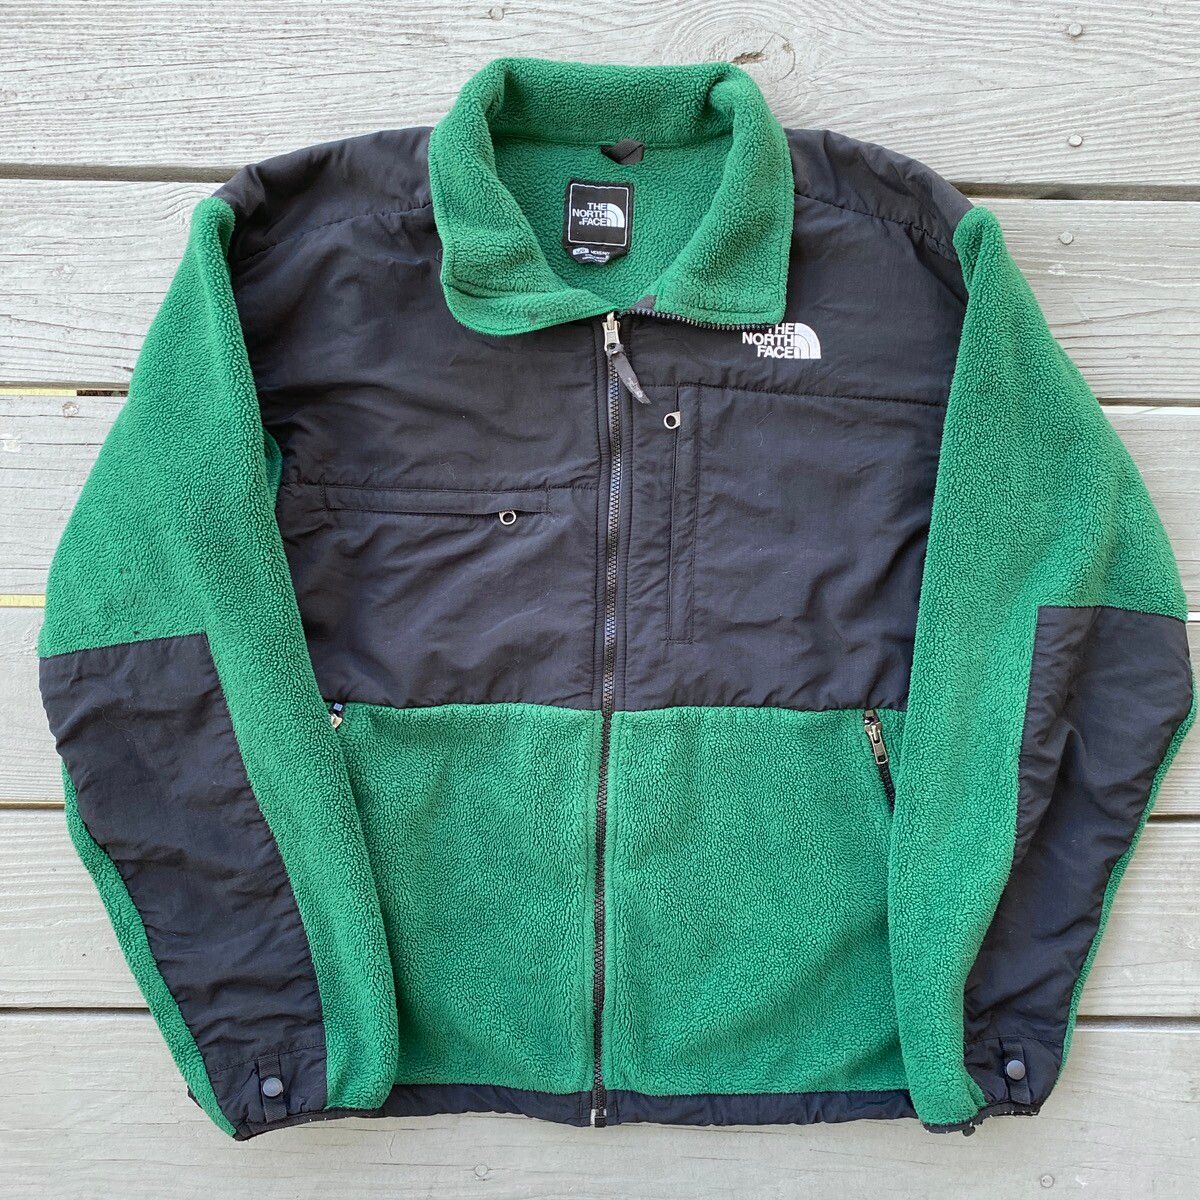 Vintage The North Face Denali 95 Night Green Vintage Zip Up Jacket Size US L / EU 52-54 / 3 - 1 Preview